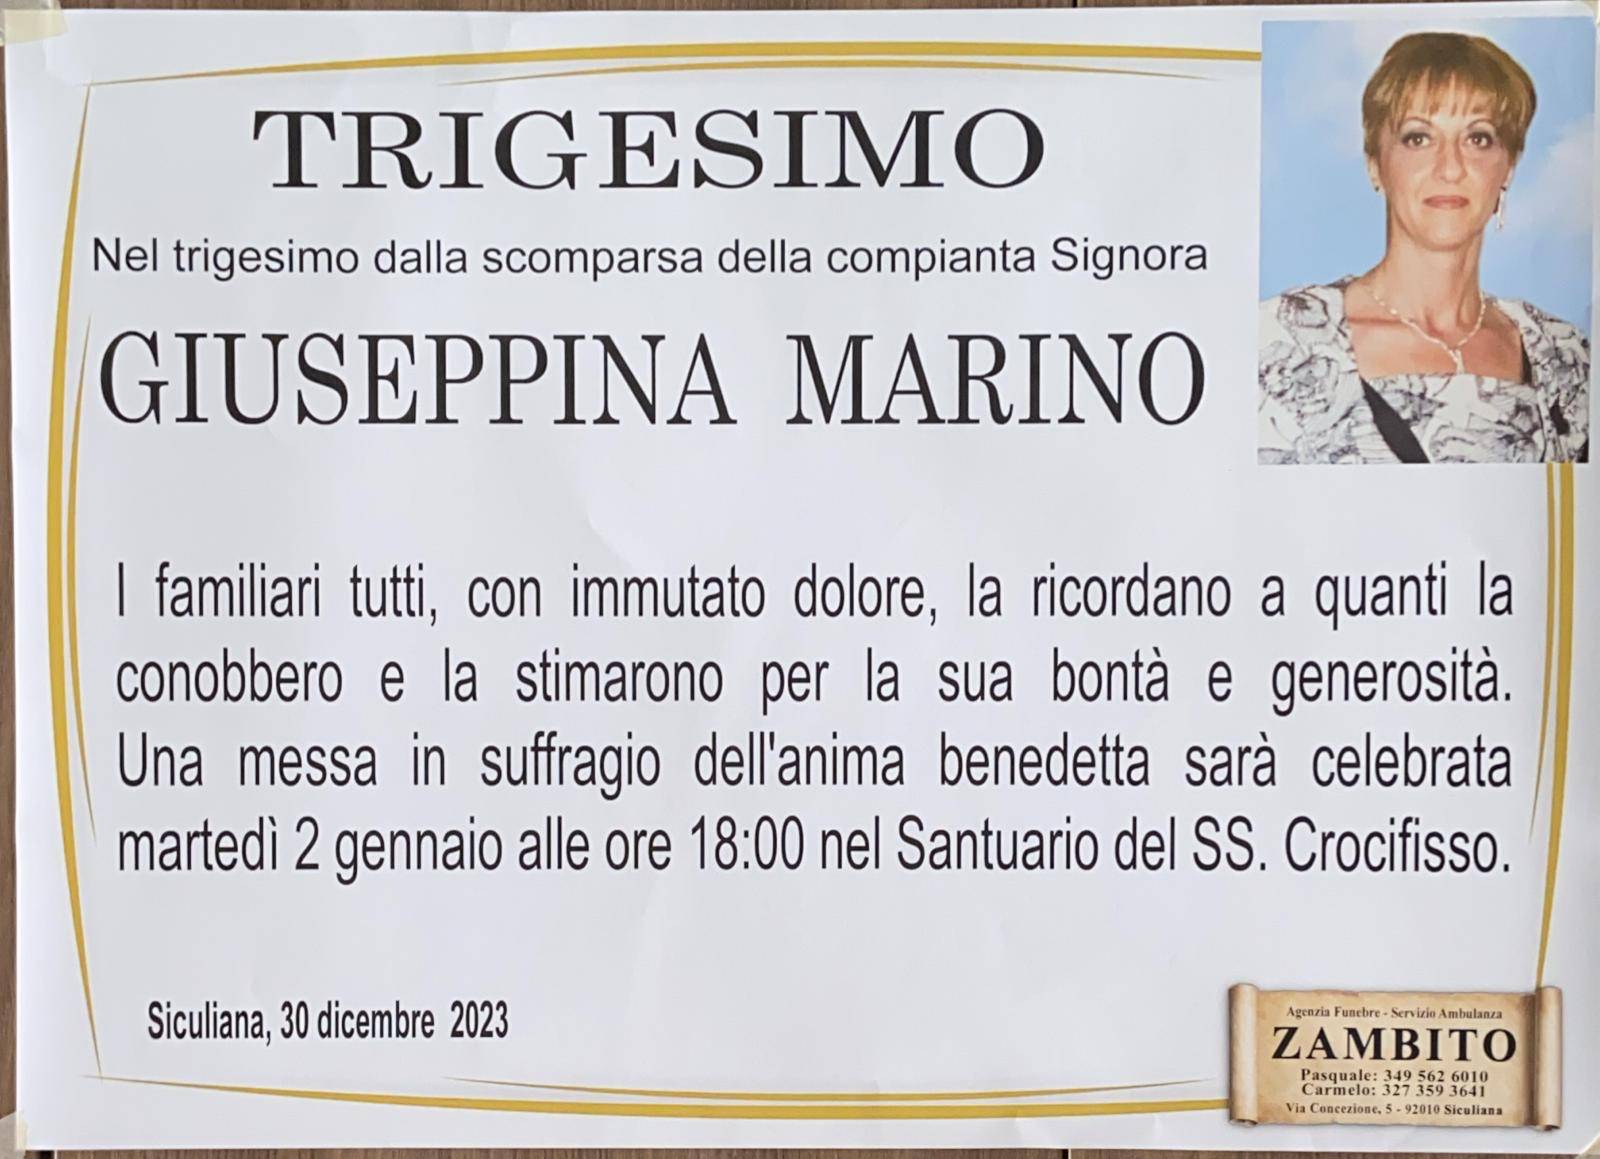 Giuseppina Marino